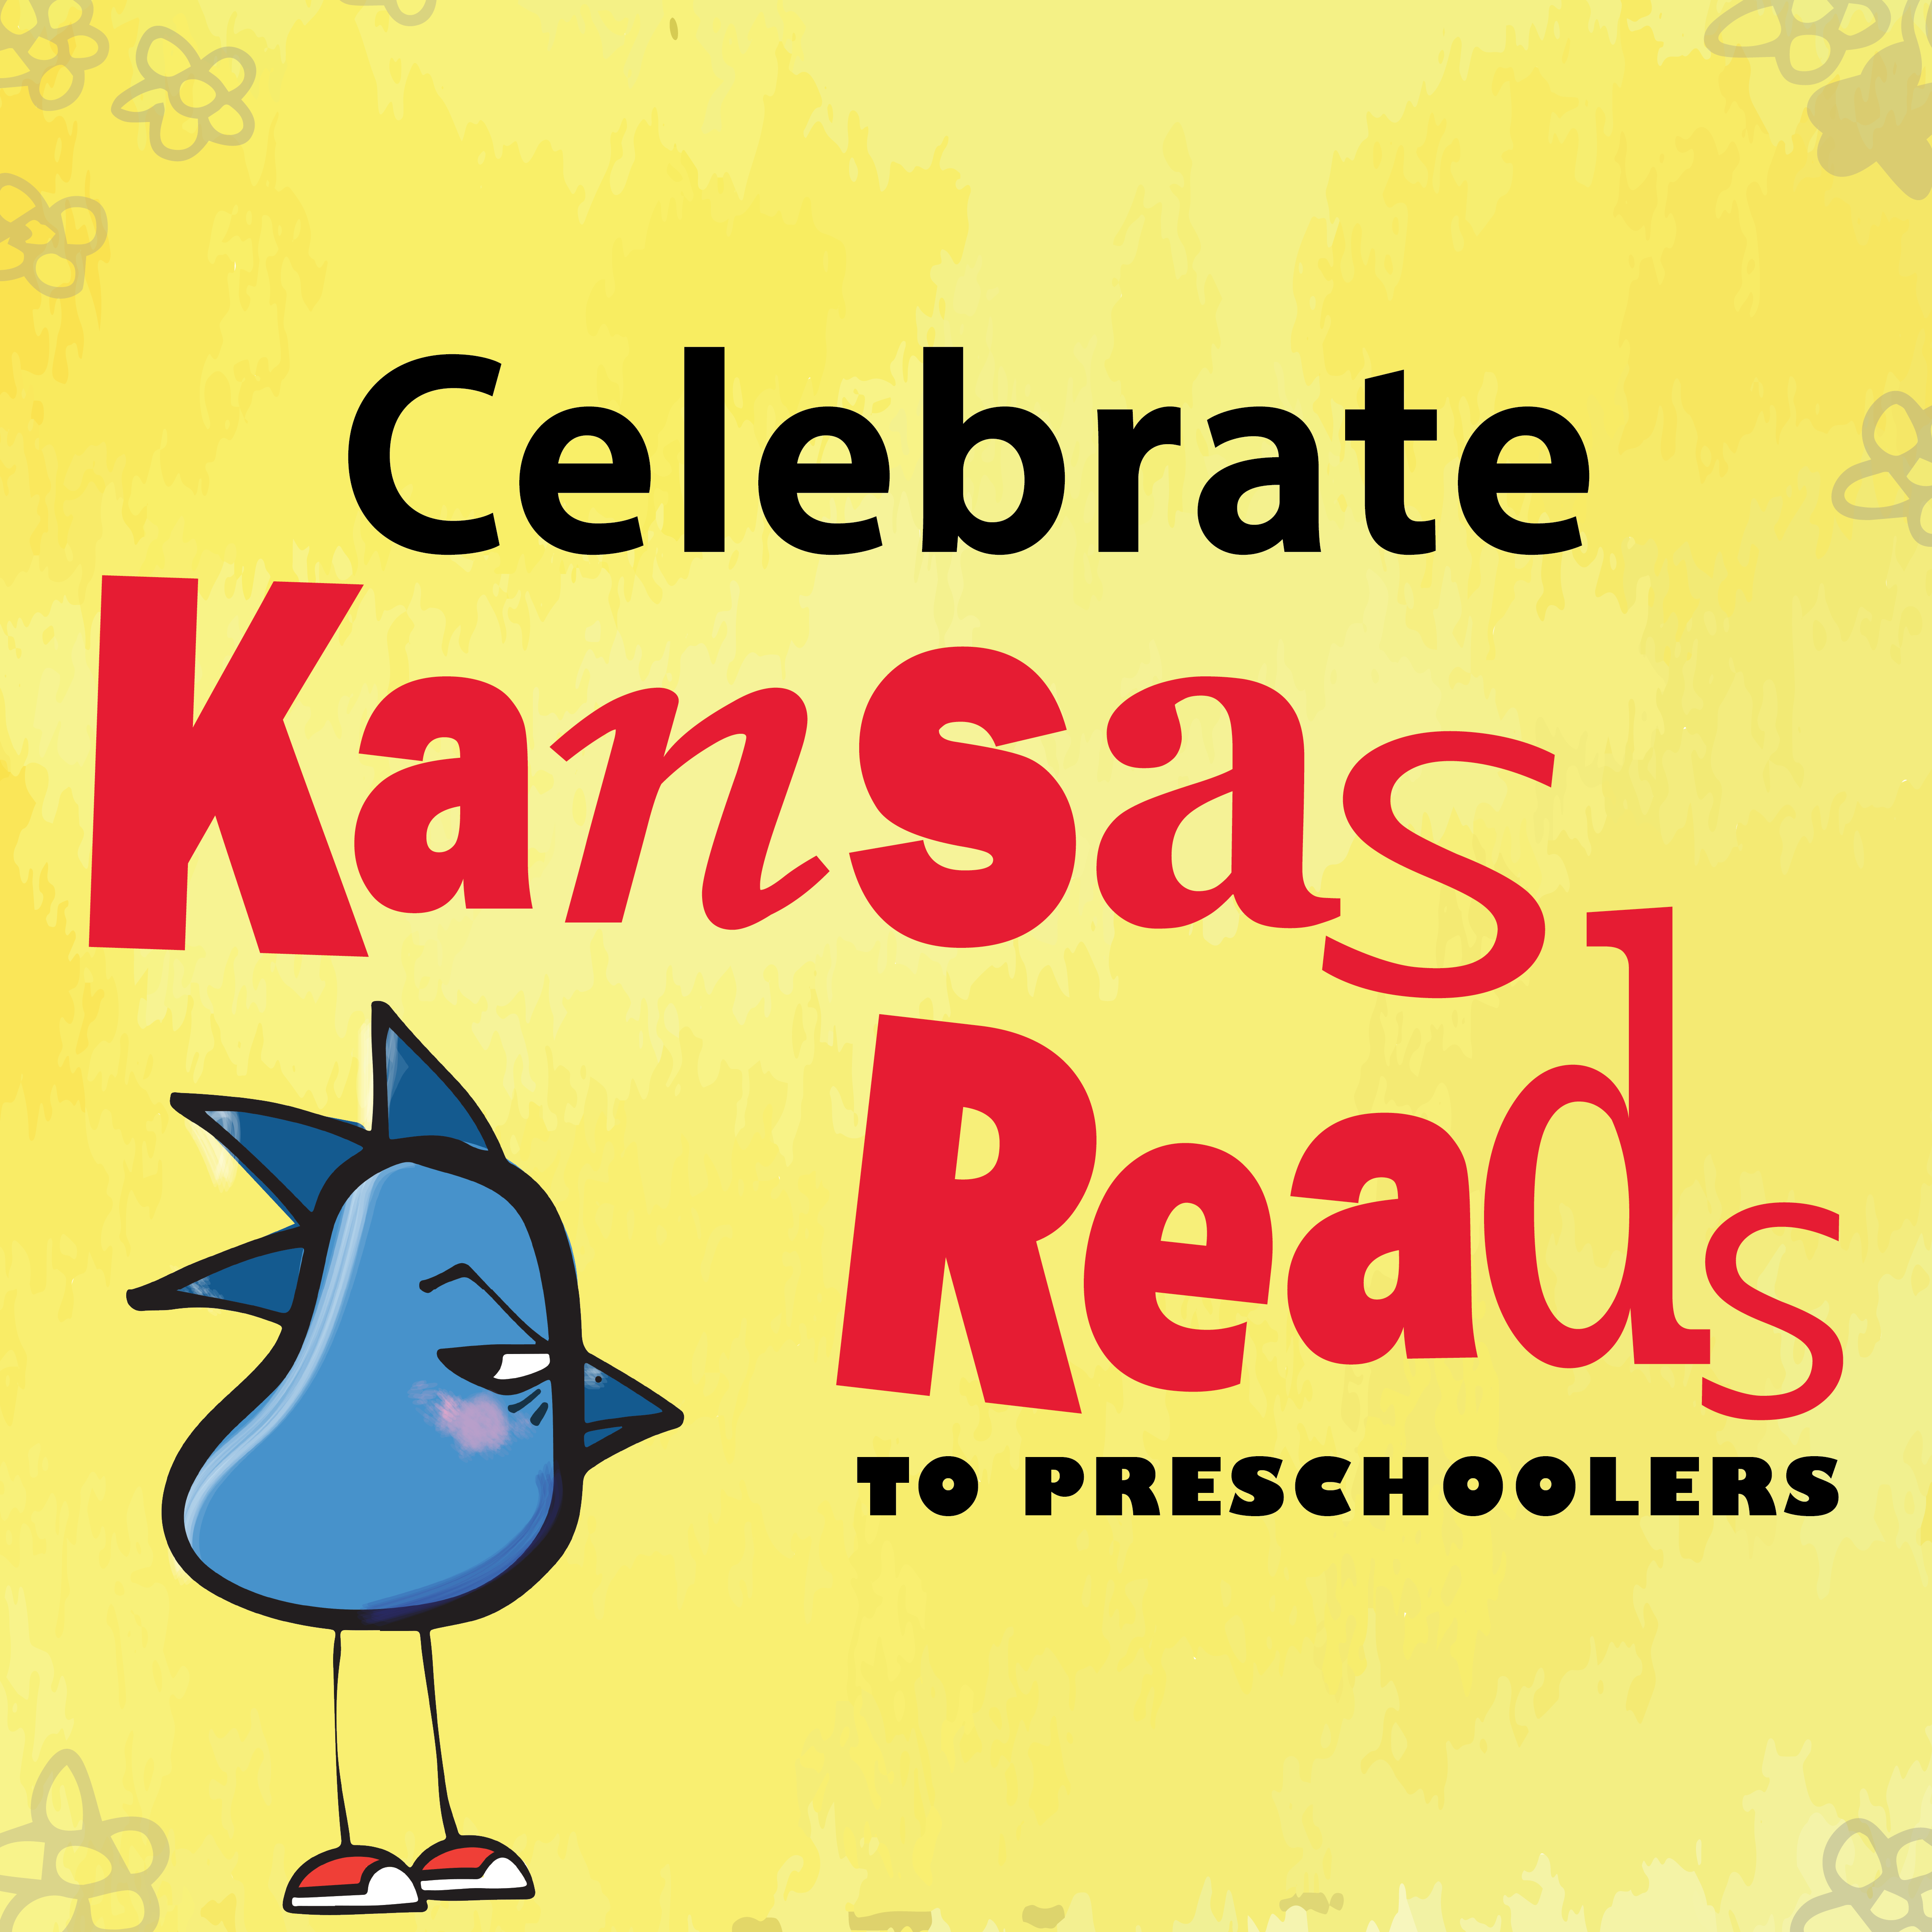 Celebrate Kansas Reads to Preschoolers, with grumpy bird image